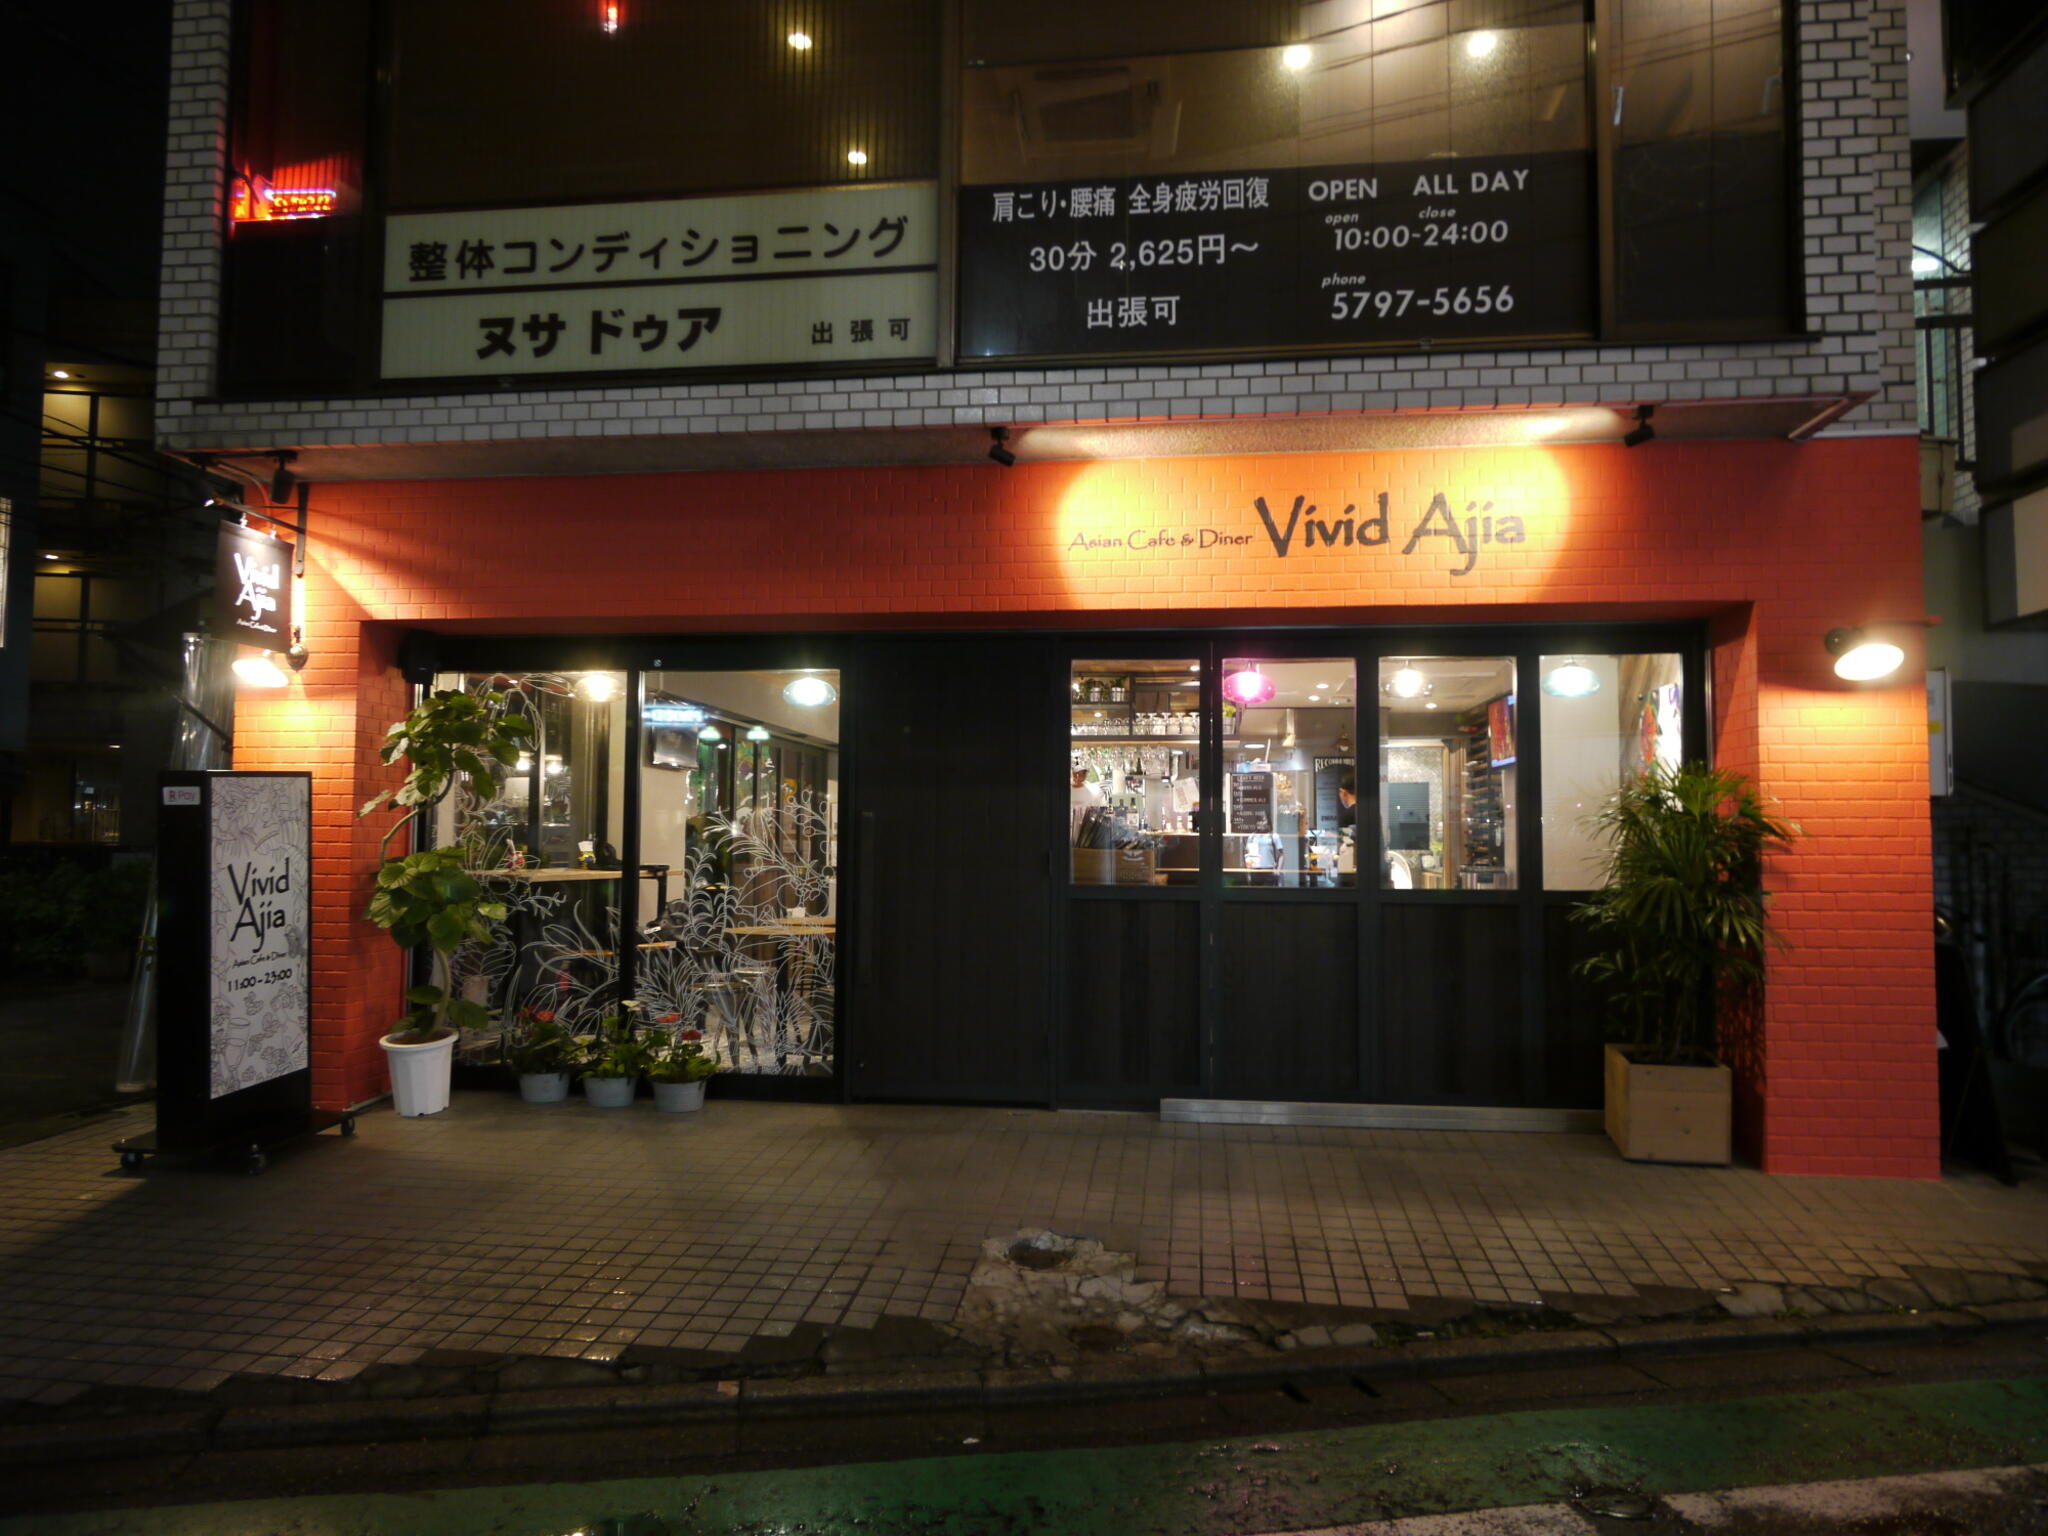 Asian Cafe ＆ Diner  Vivid Ajiaの代表写真1